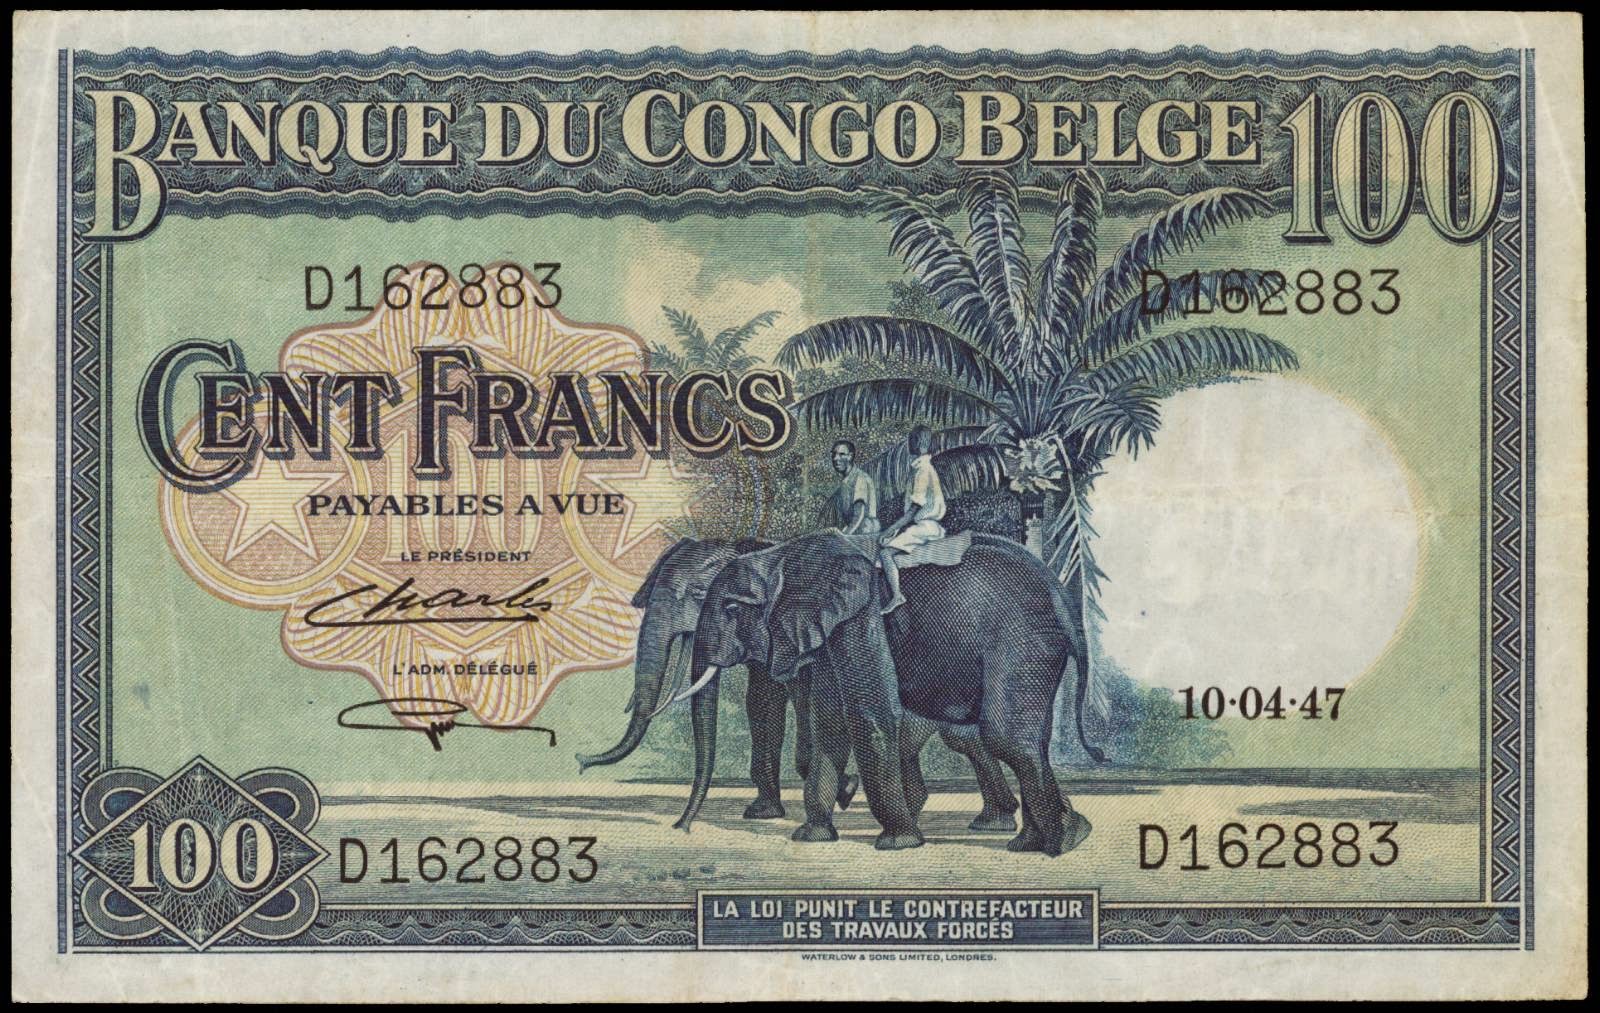 Belgian Congo banknotes 100 Francs